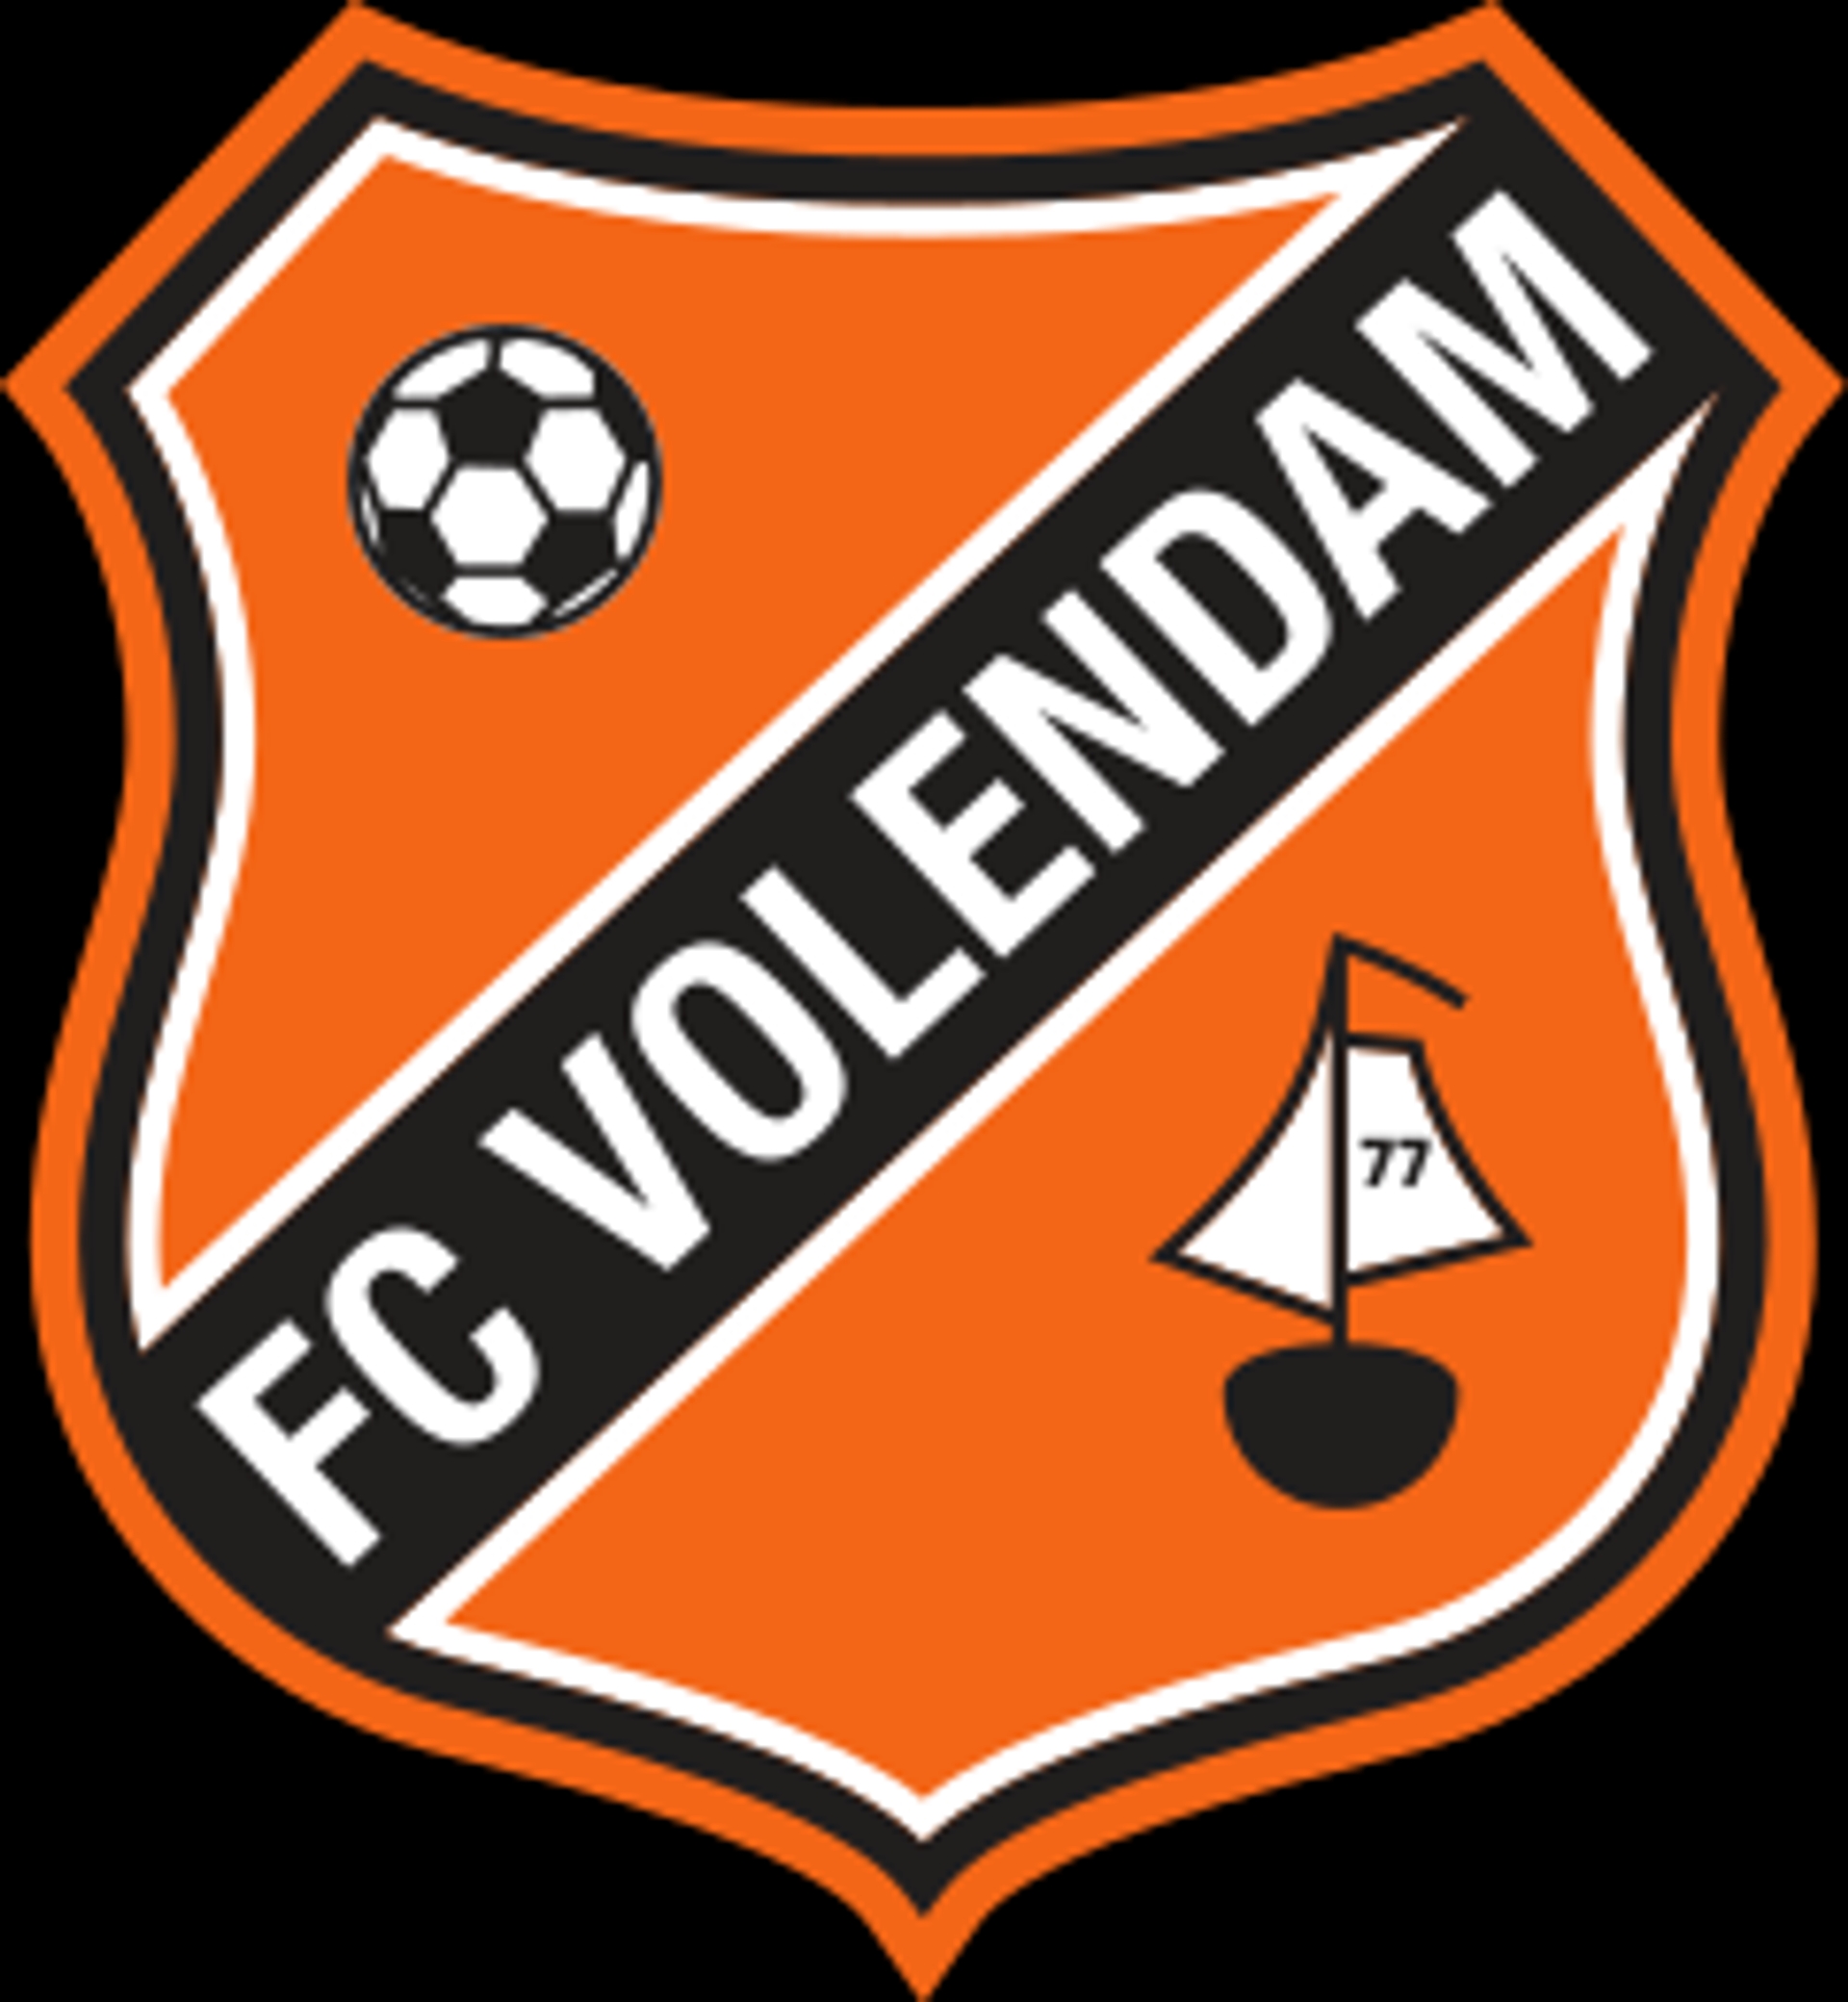 FC_Volendam_logo.svg